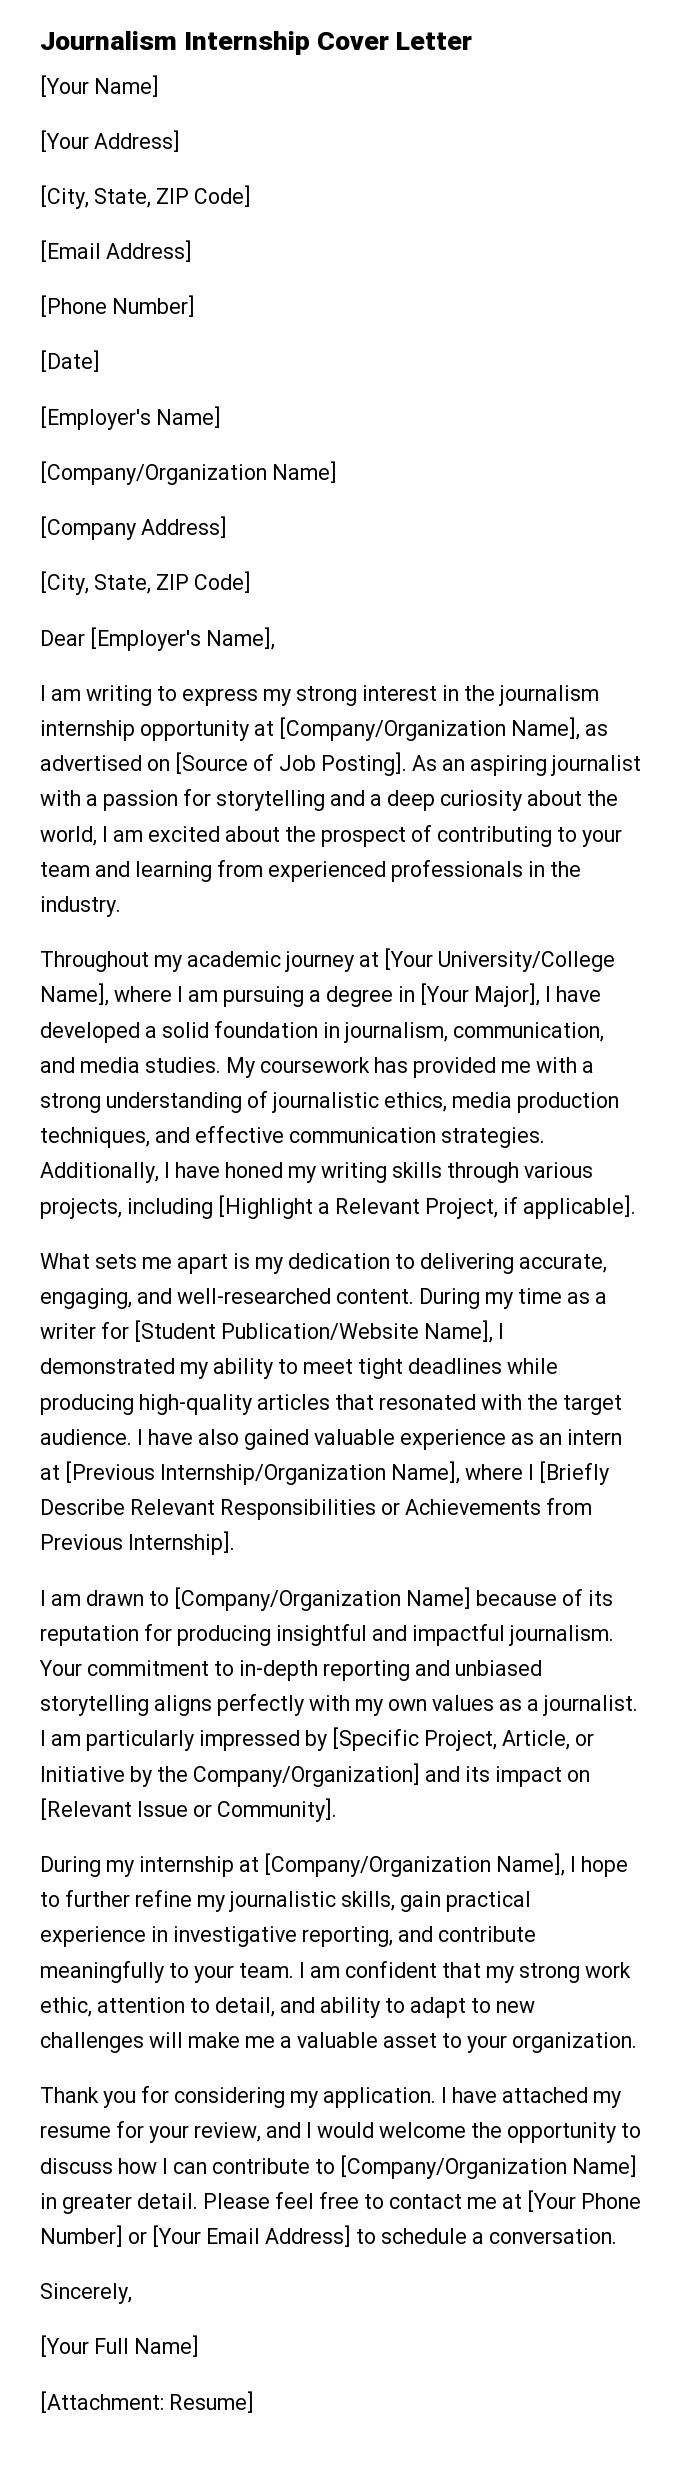 Journalism Internship Cover Letter